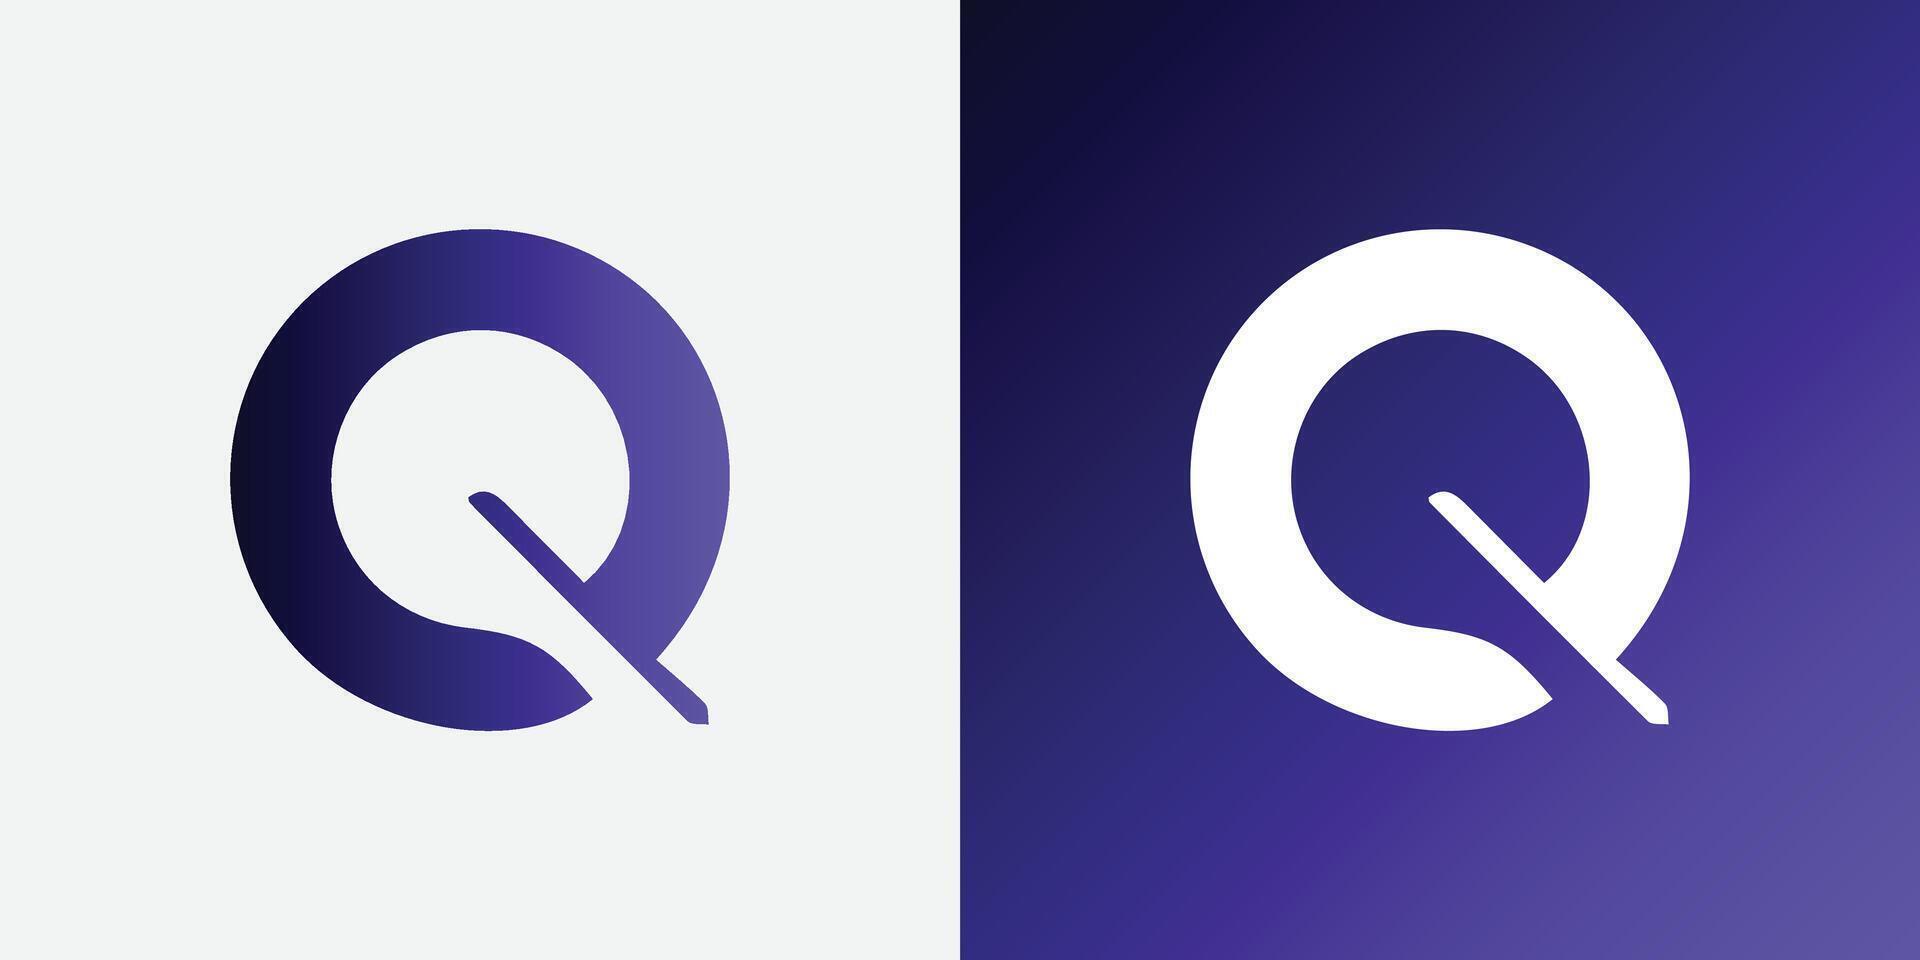 Q initial based on the Alphabet icon logo. Premium Business logo vector